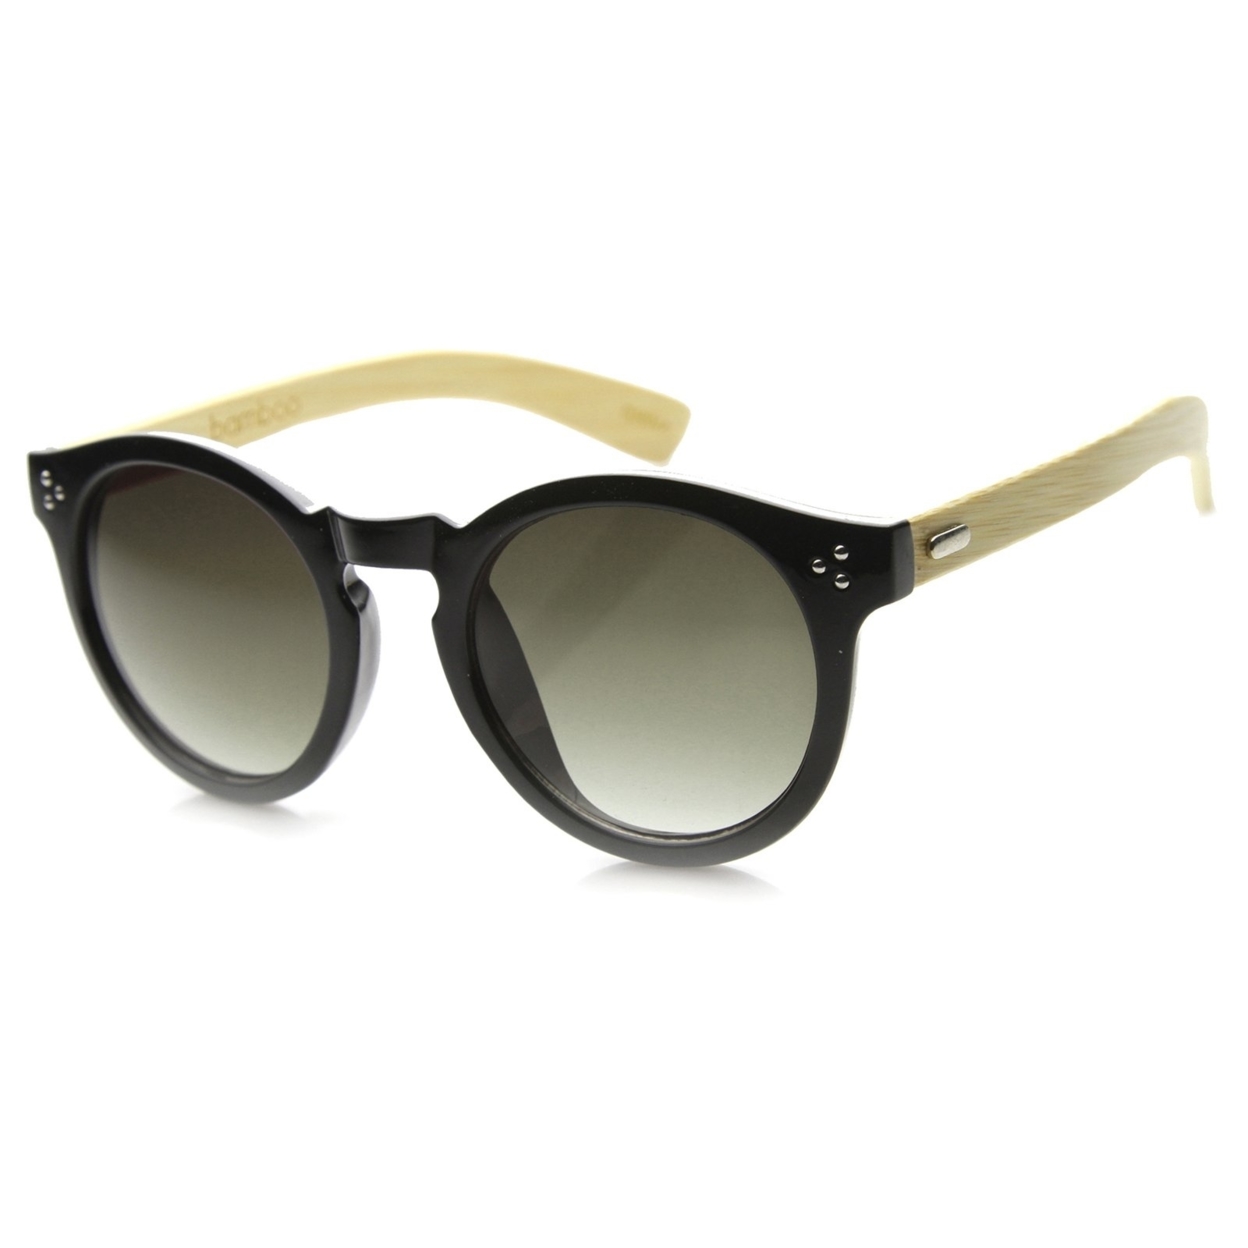 Eco-Friendly Genuine Bamboo Horned Rim P3 Key Hole Studded Round Sunglasses - Shiny Black / Lavender